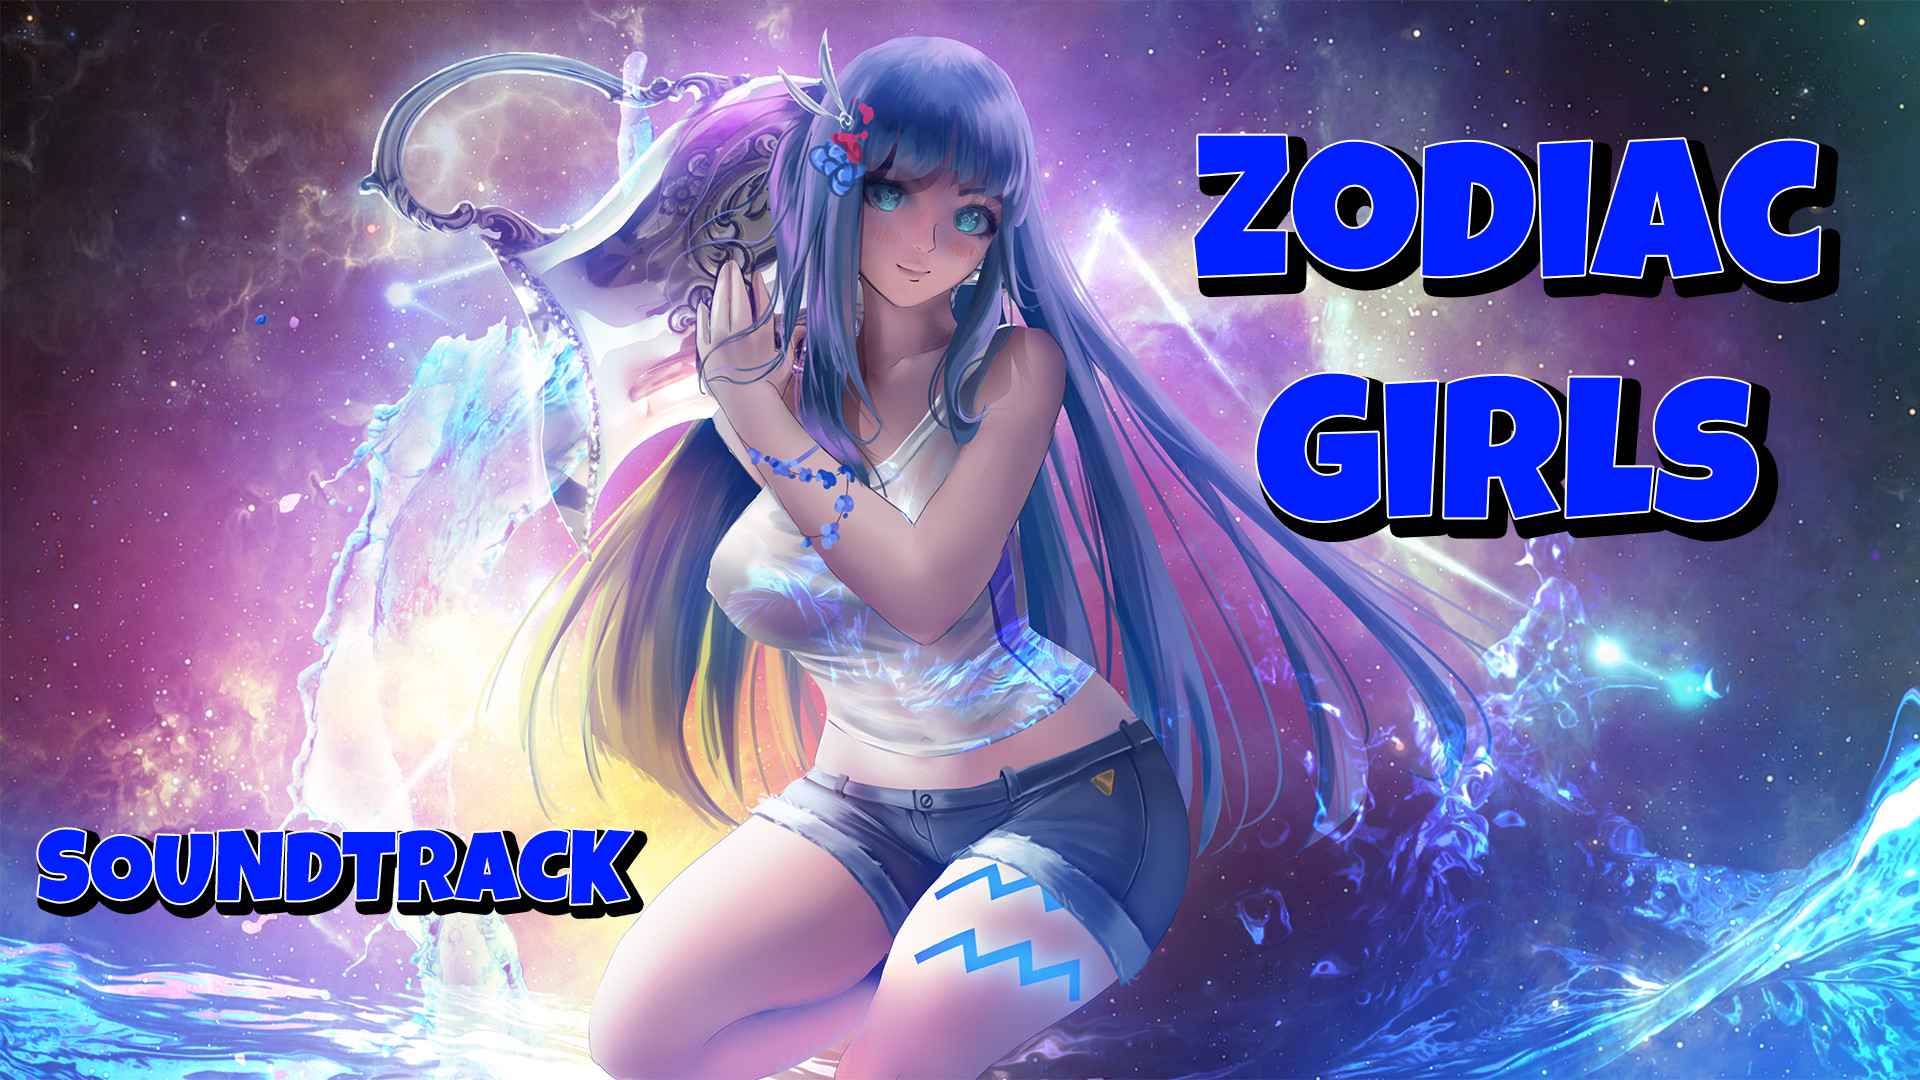 Zodiac Girls Soundtrack Featured Screenshot #1